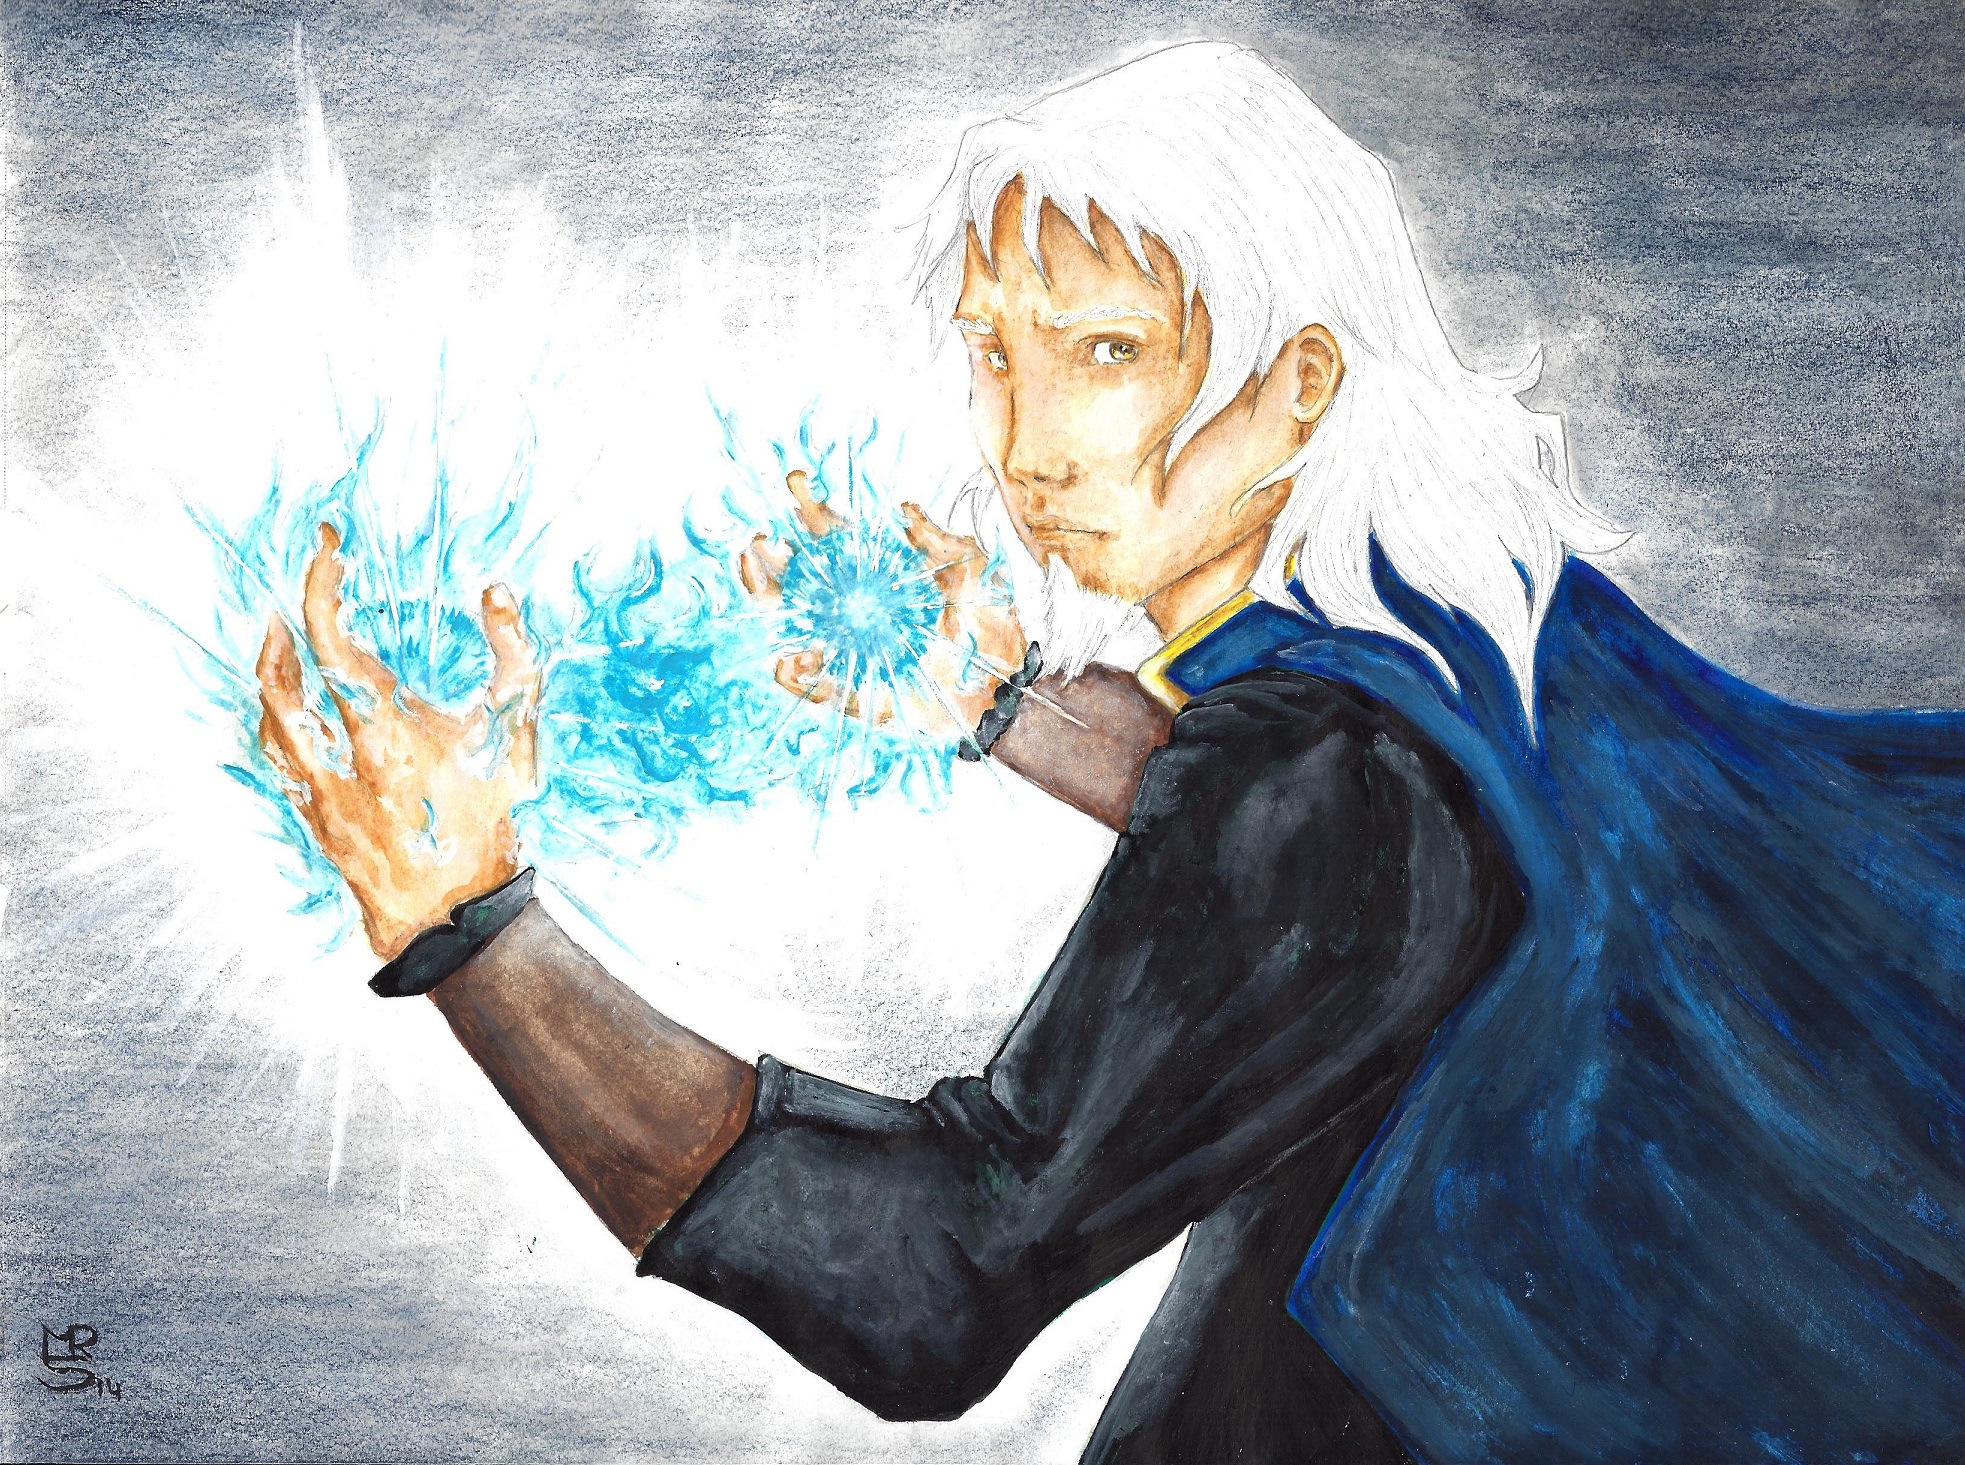 Crasthors magic by Morrigain